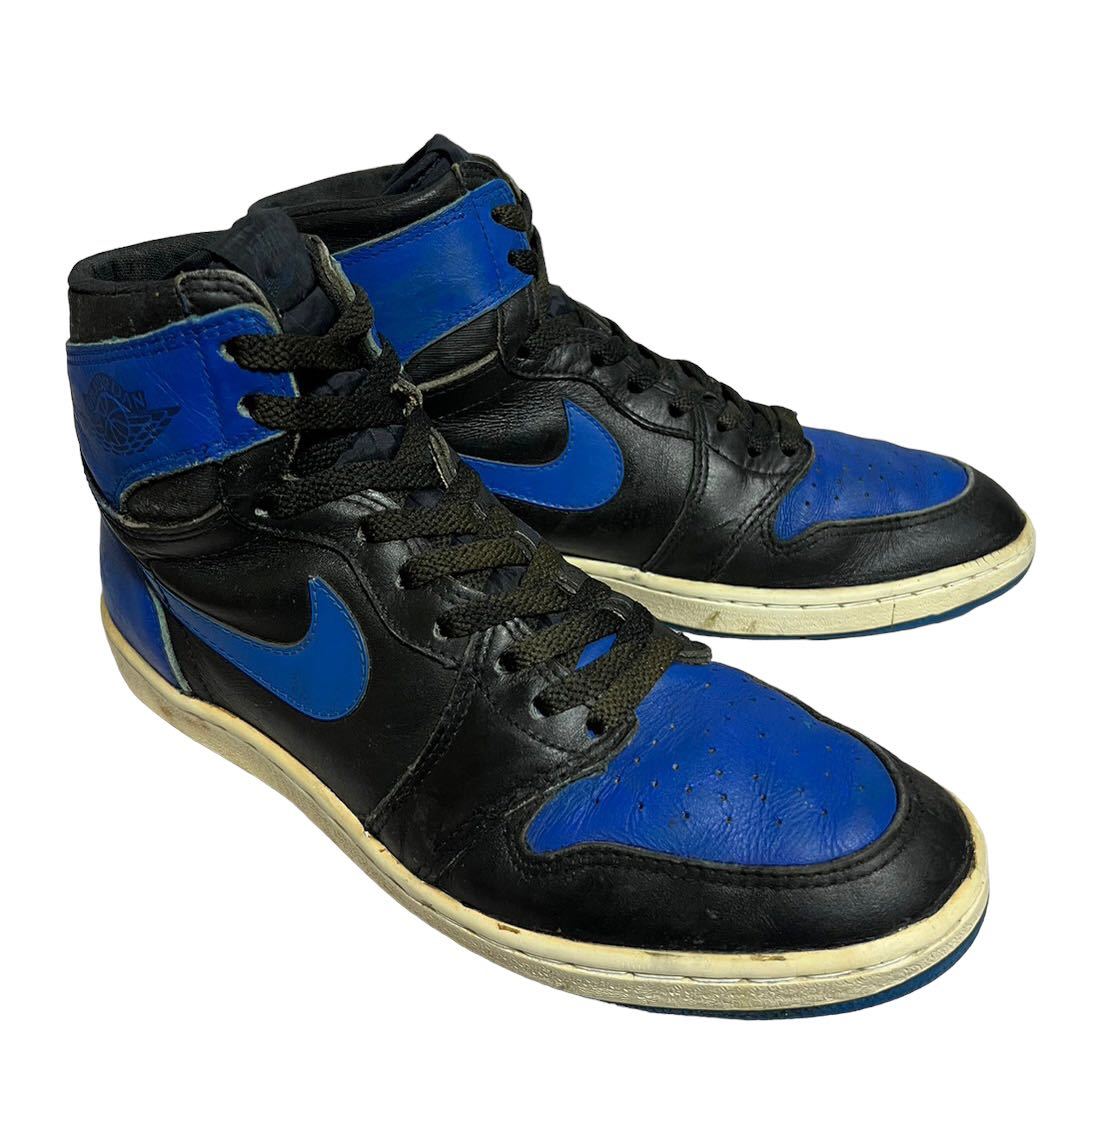  Vintage 85 year Korea made NIKE AIR JORDAN 1 ORIGINAL ROYAL Nike air Jordan 1 Royal black / blue original US11 29.